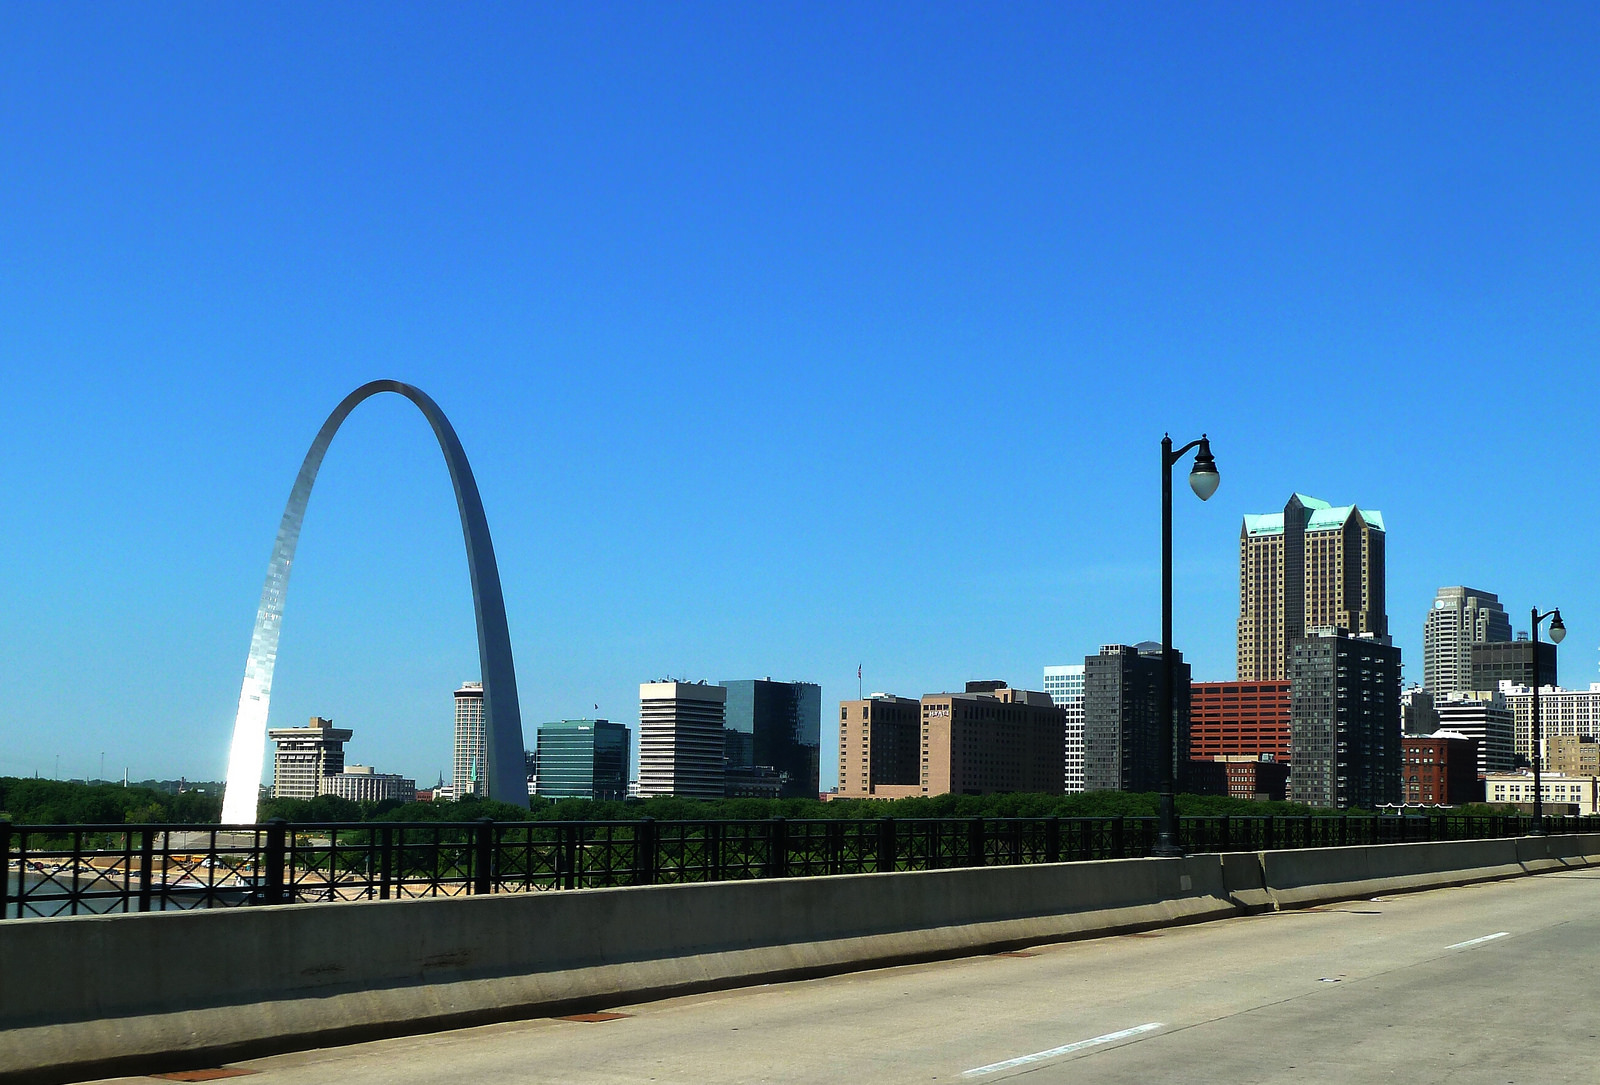 10. St. Louis, Missouri